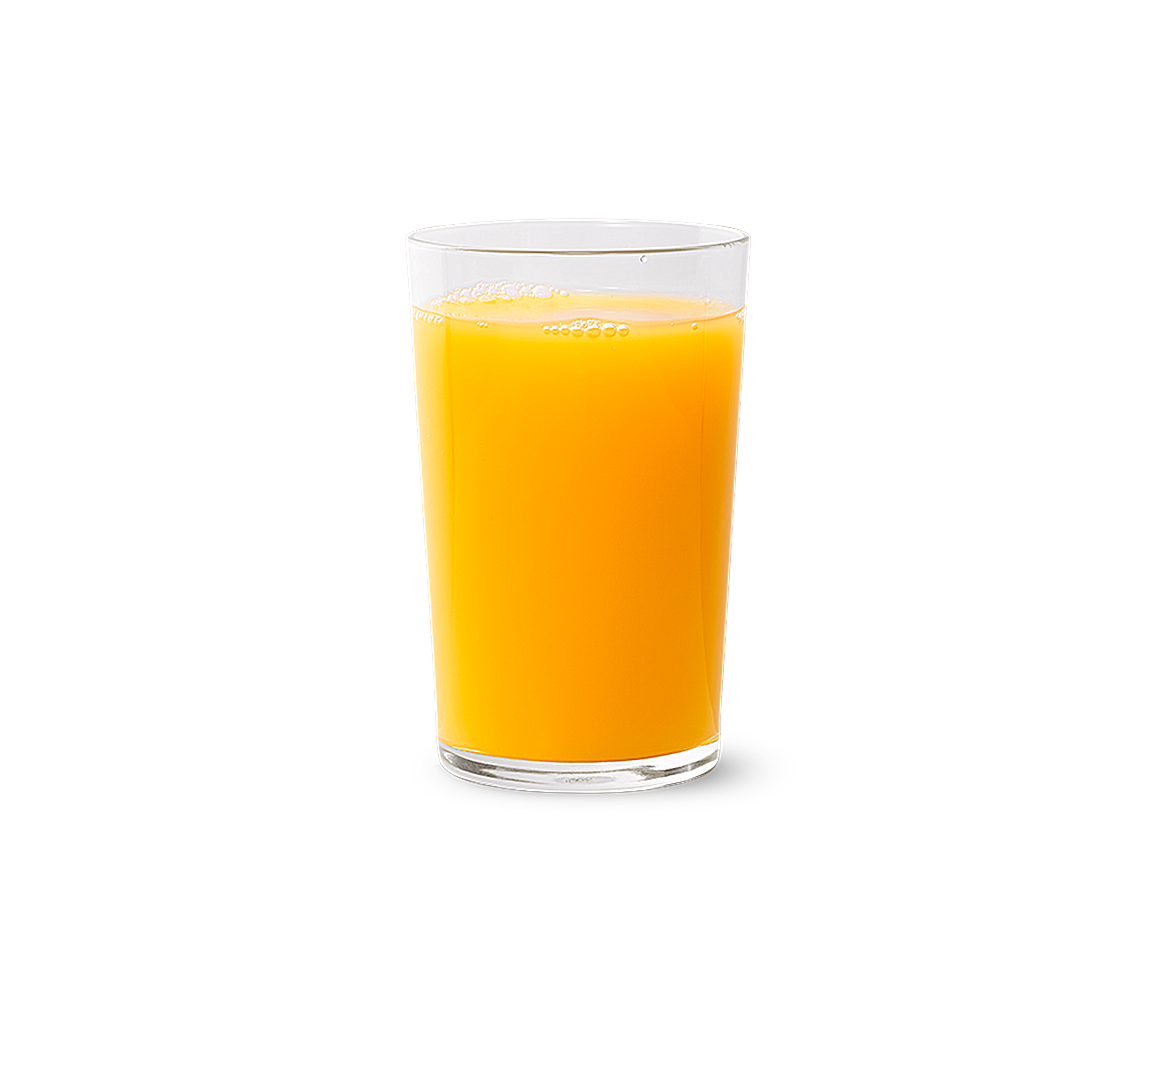 Appelsinjuice